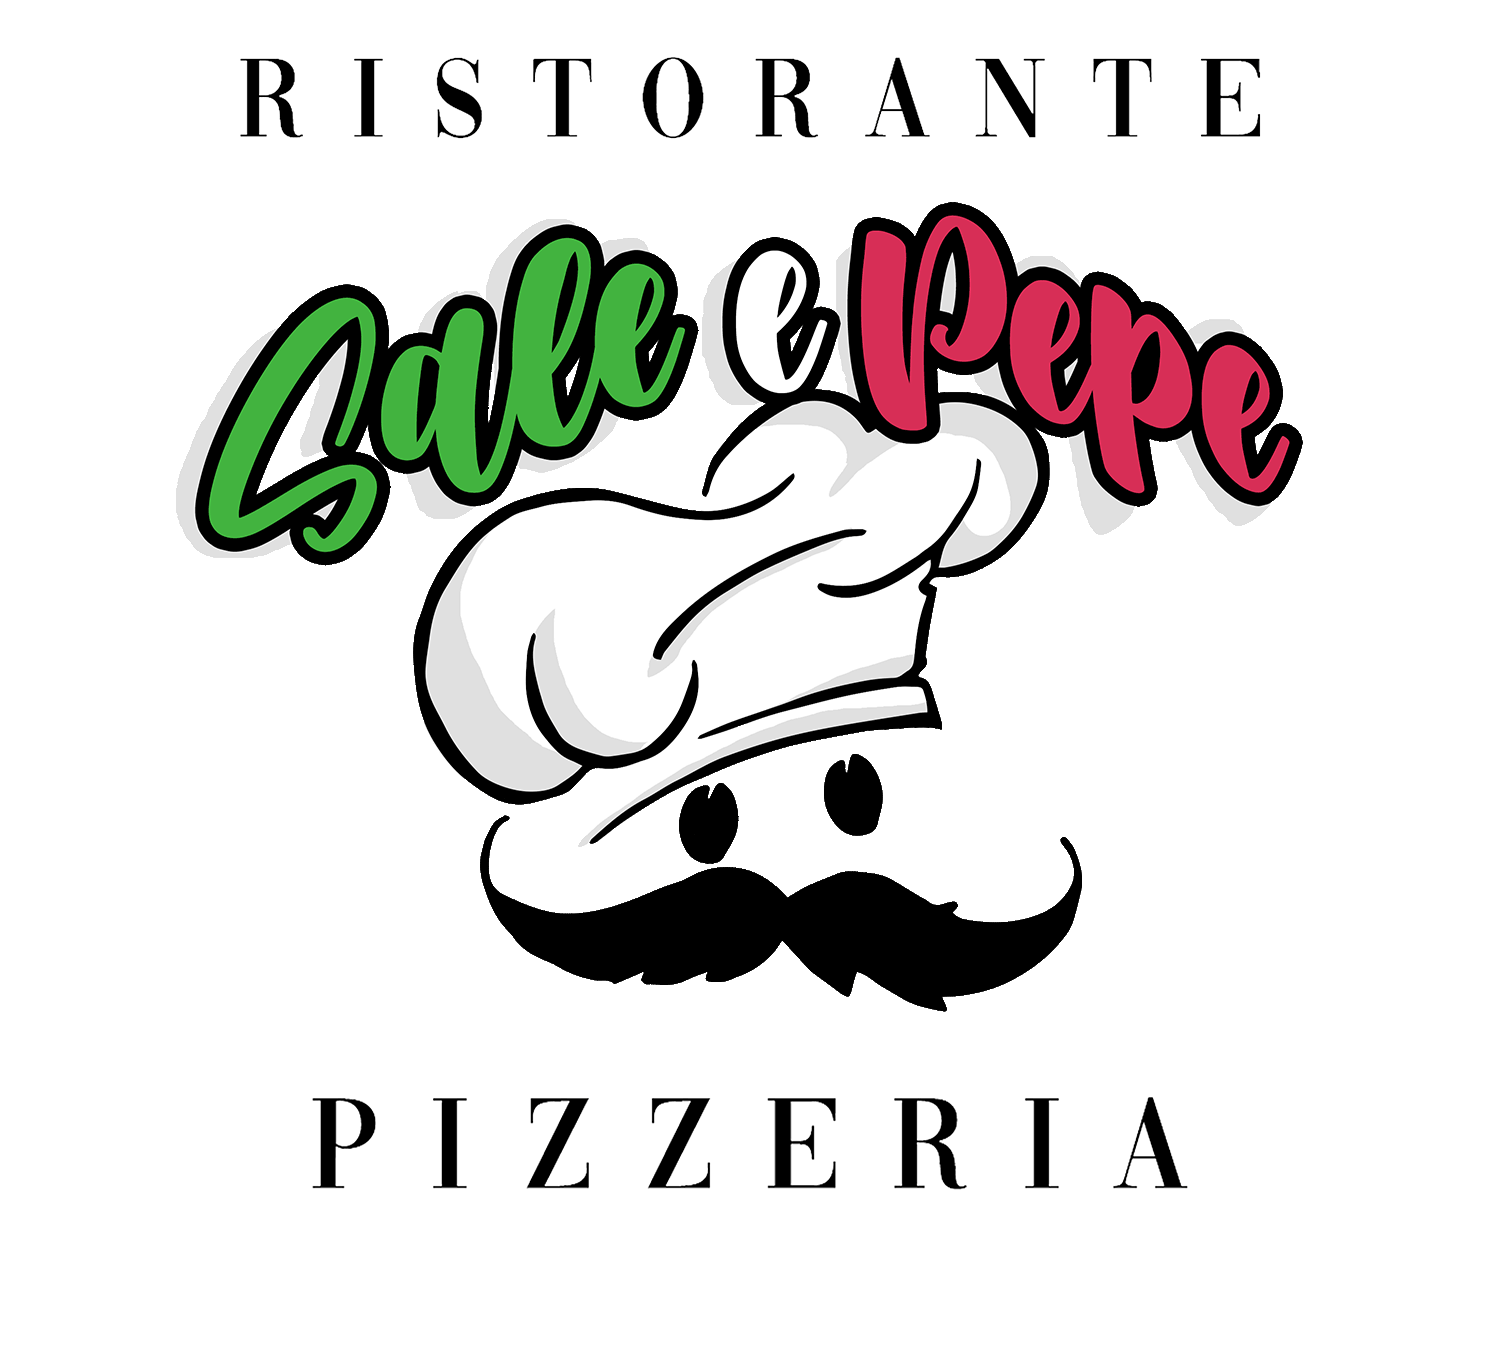 Ristorante Sale e Pepe - Italienischer Kochgenuss